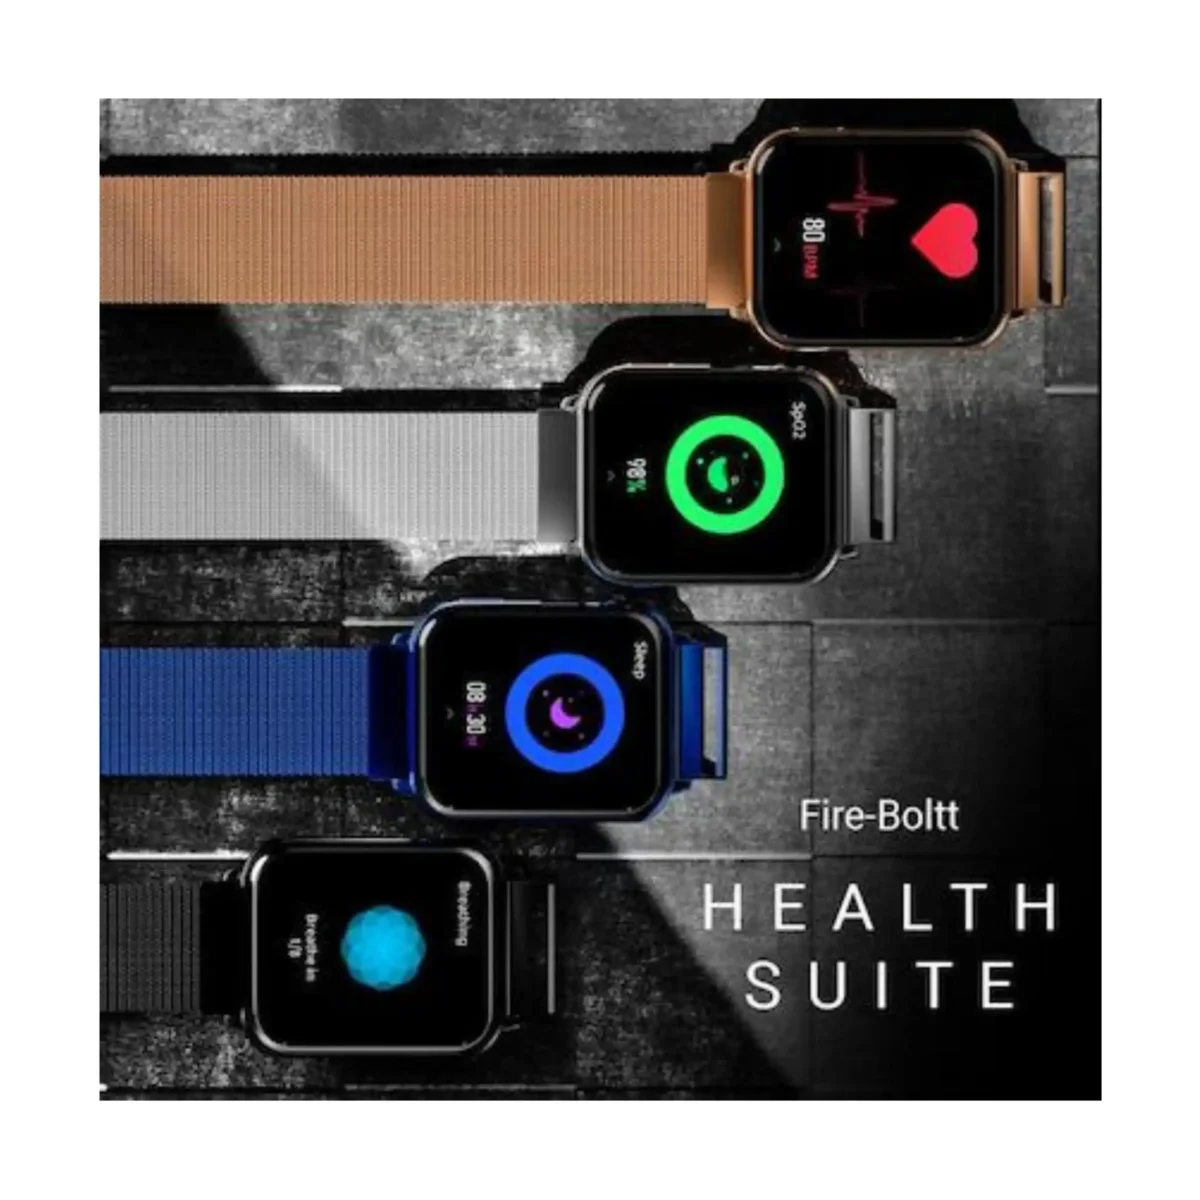 Fire boltt king smartwatch with bluetooth calling 10 scaled fire-boltt king smartwatch with bluetooth calling